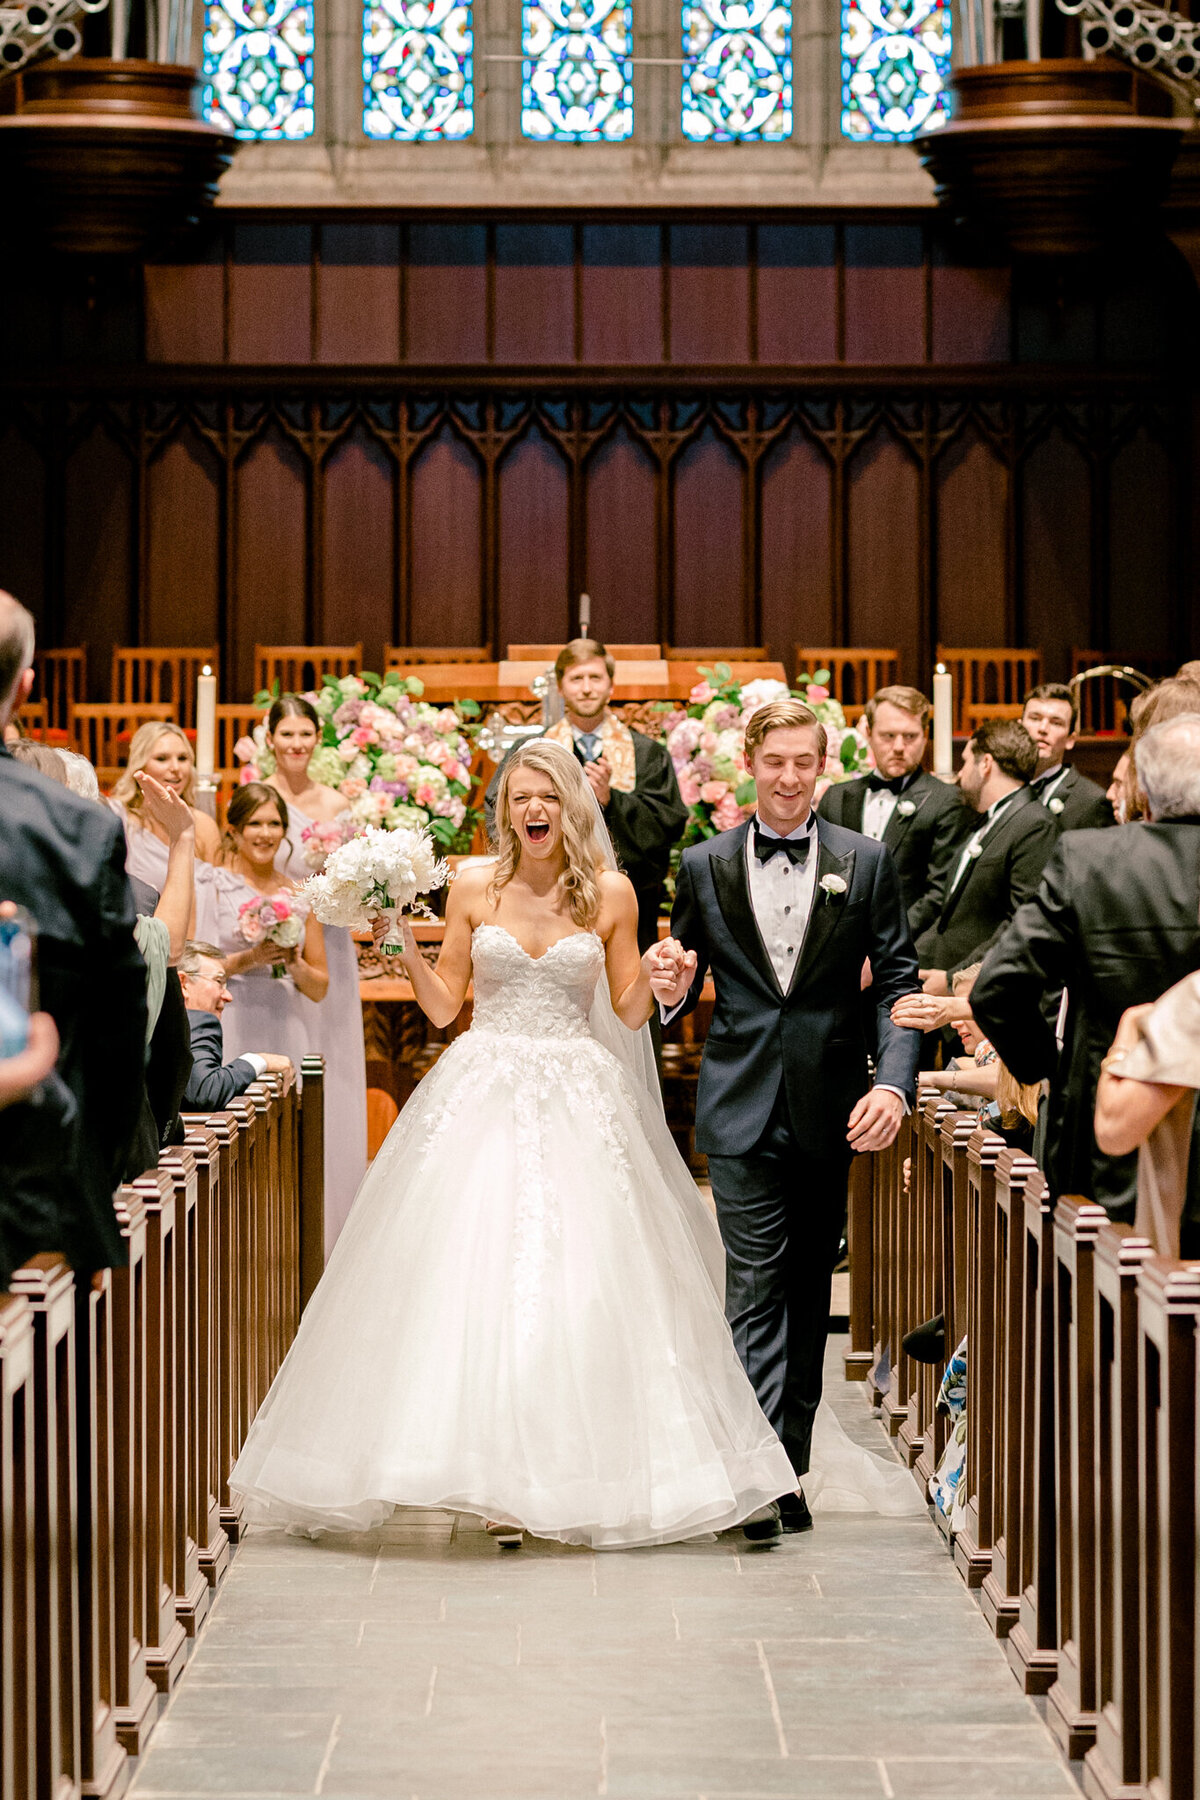 Shelby & Thomas's Wedding at HPUMC The Room on Main | Dallas Wedding Photographer | Sami Kathryn Photography-134